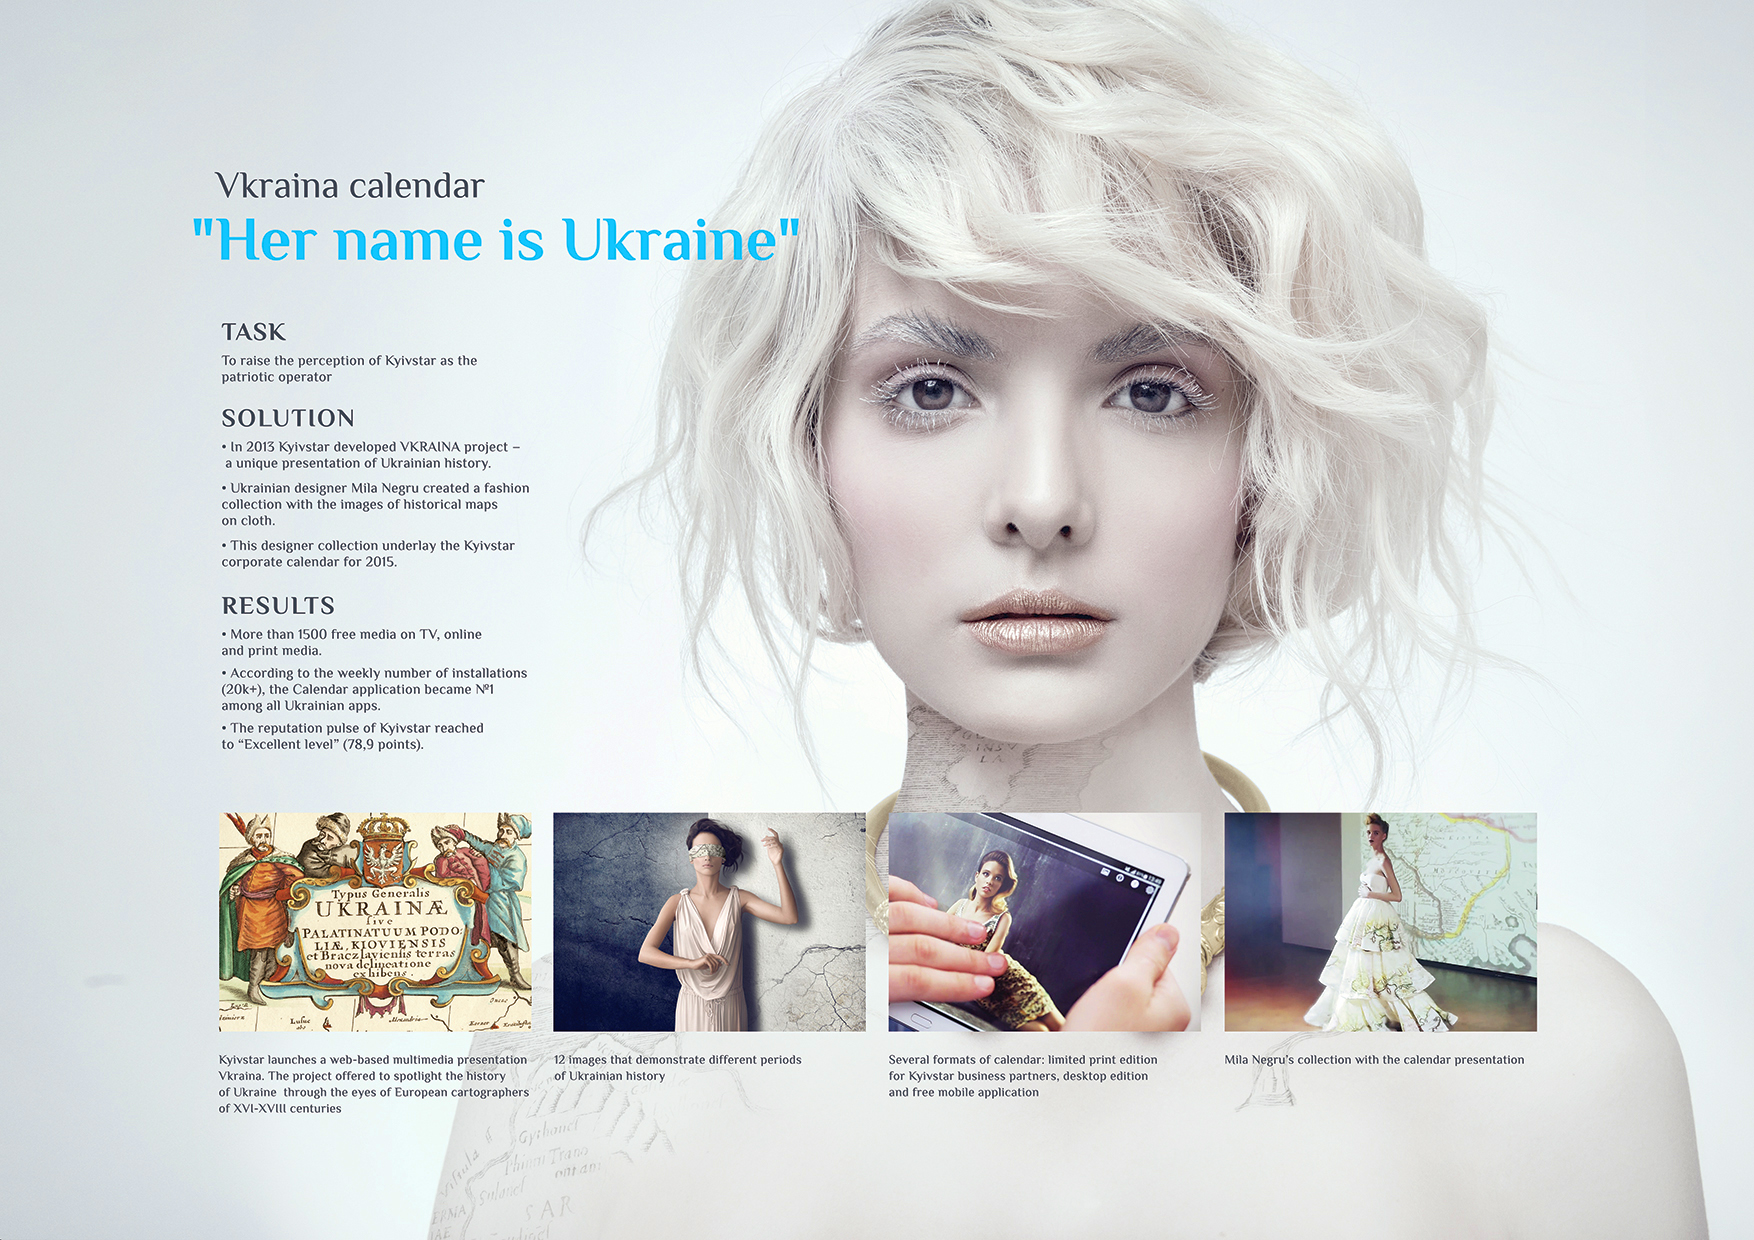 Her name is Ukraine